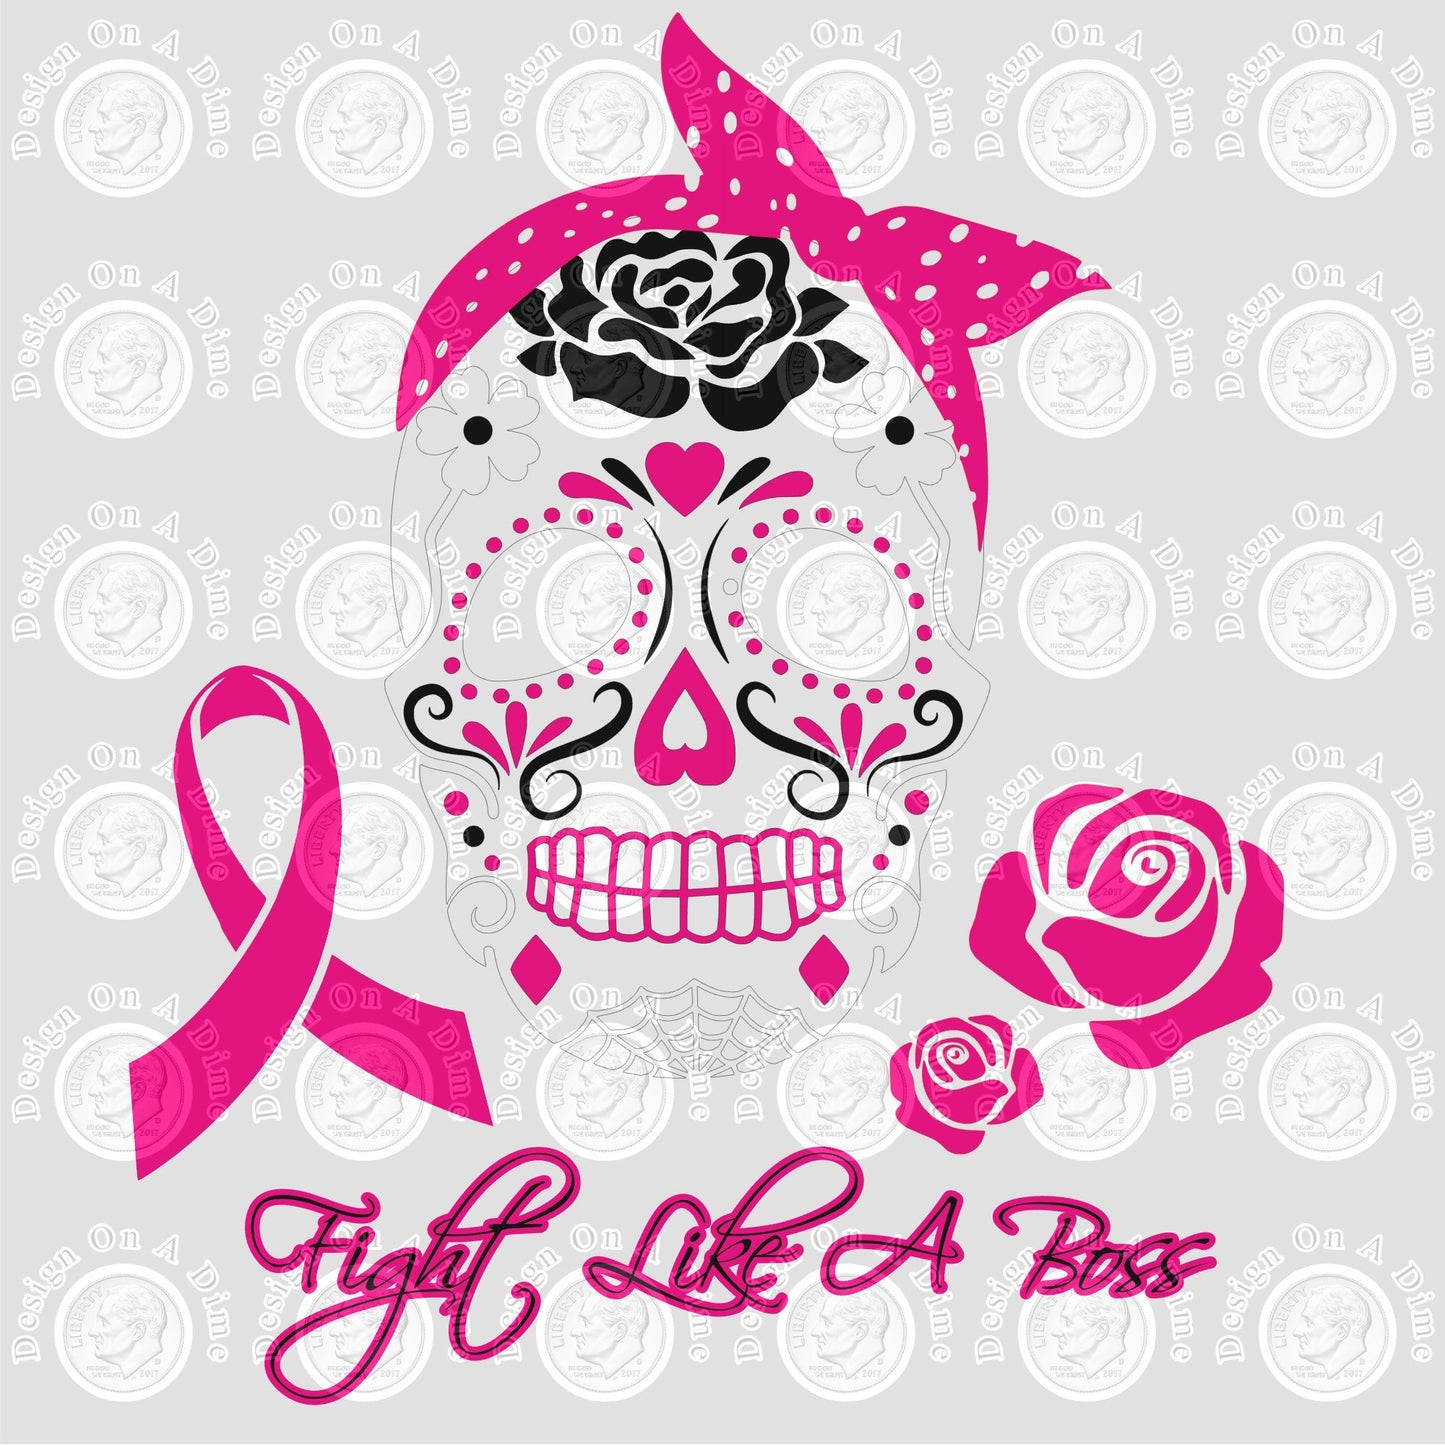 Breast Cancer Fight Light a Boss Sugar Skull Digital File PNG Download